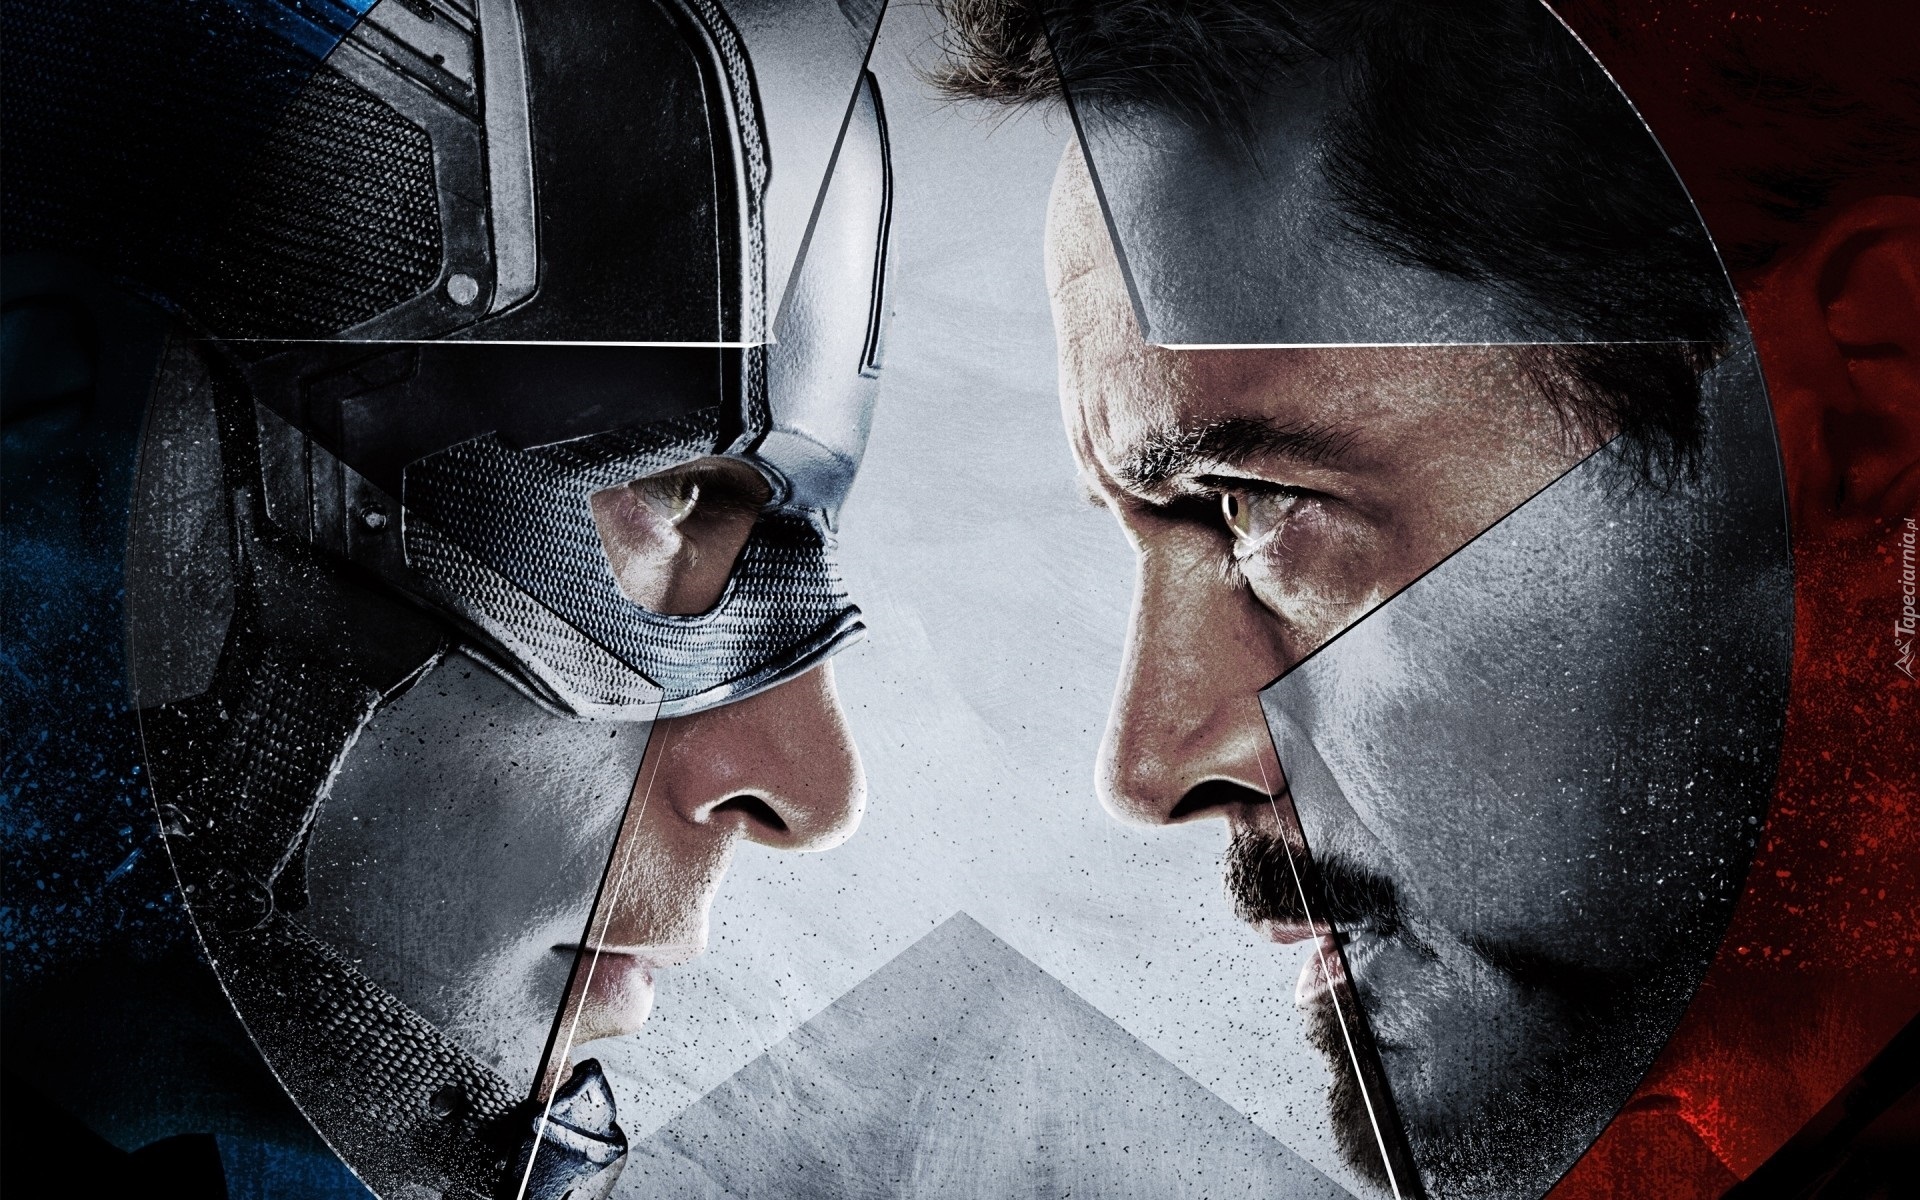 Film, Kapitan Ameryka: Wojna Bohaterów, Chris Evans, Robert Downey Jr